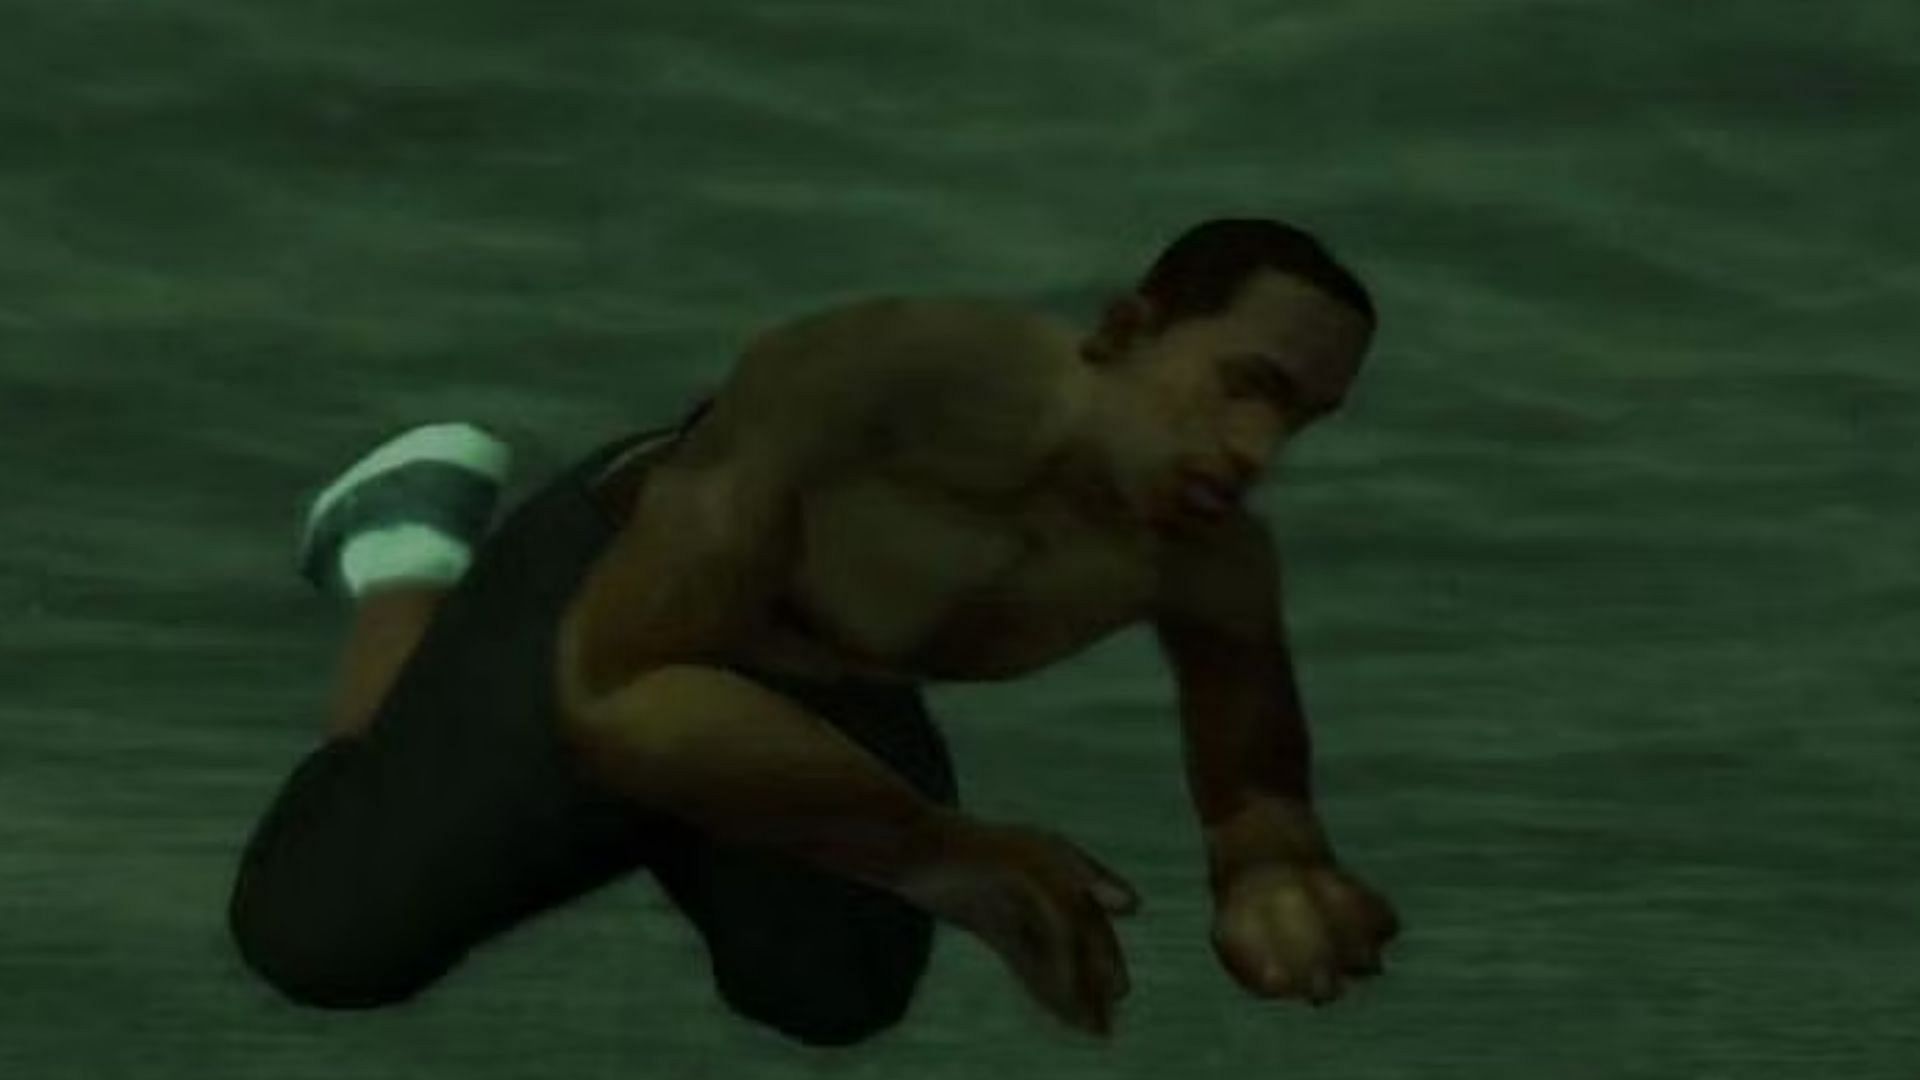 CJ diving underwater (Image via Rockstar Games)